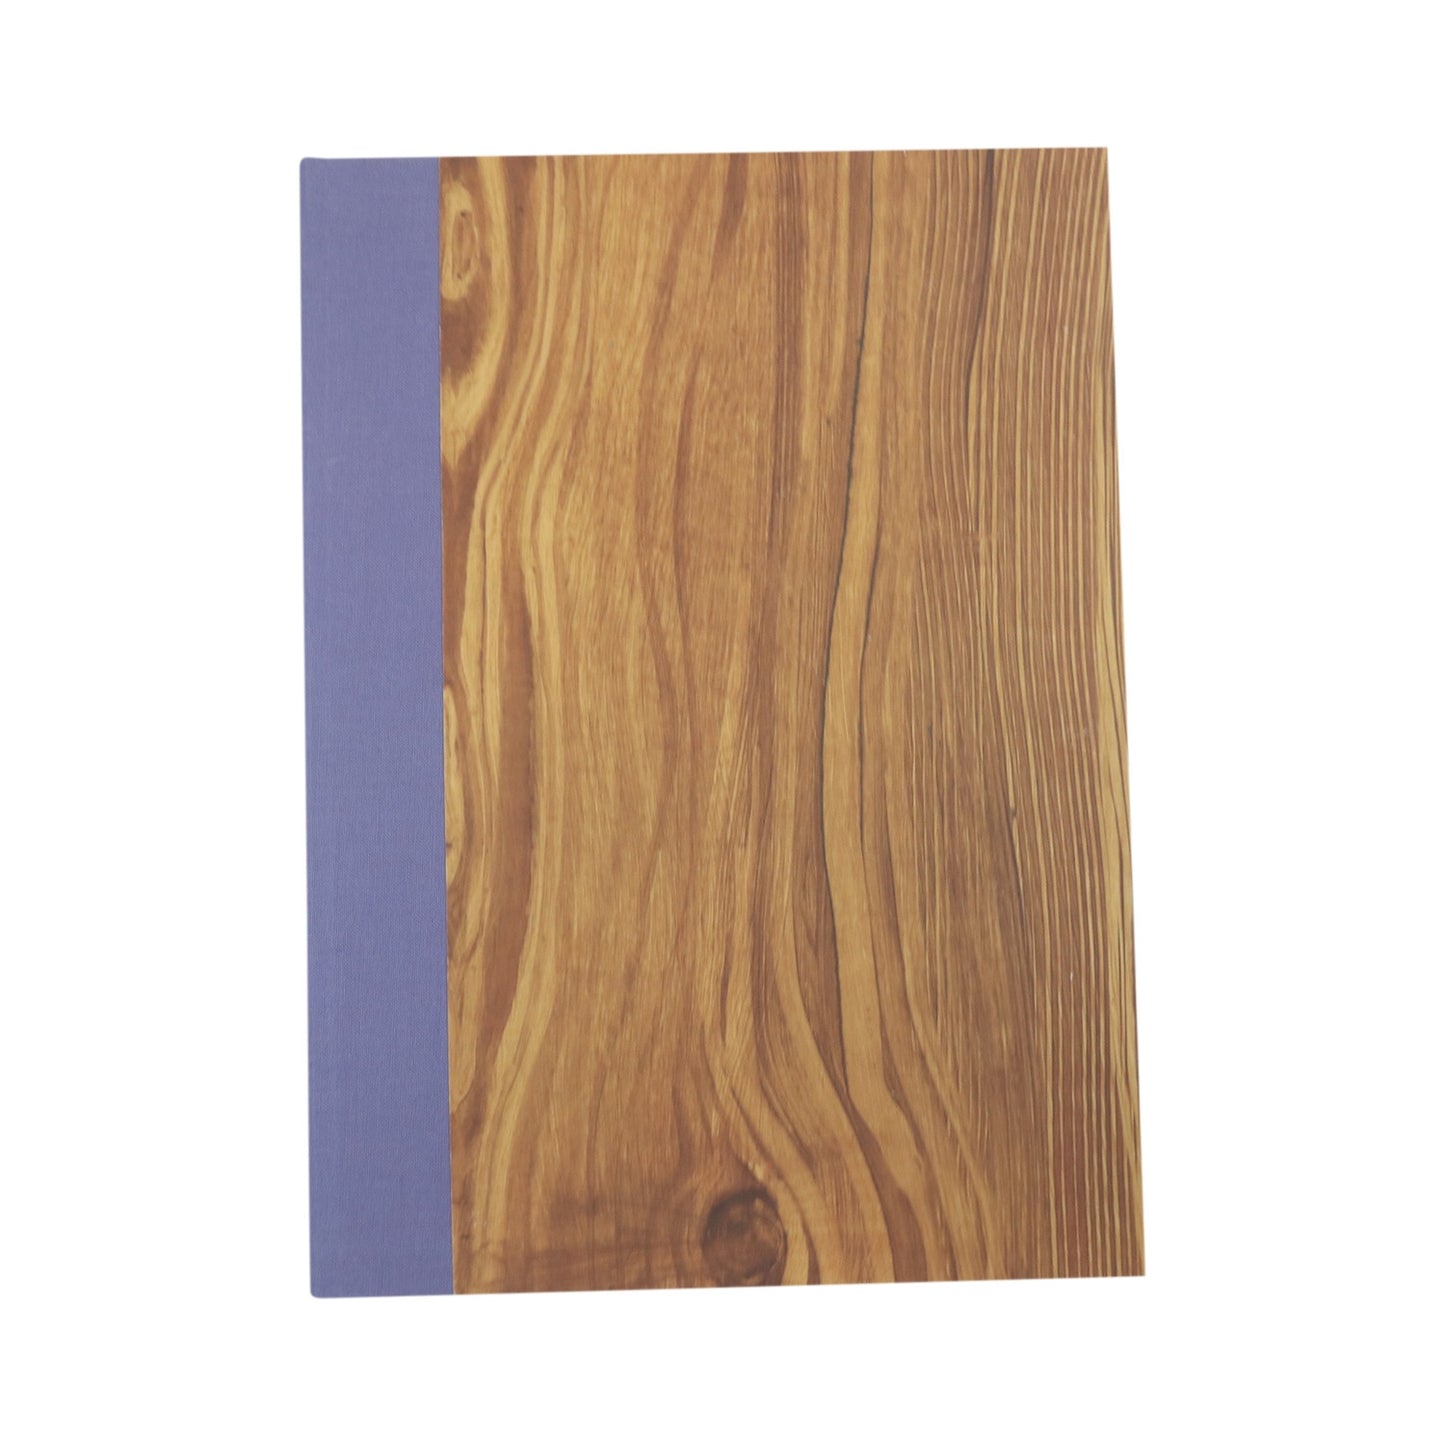 A5 Notebook - Pitch Pine